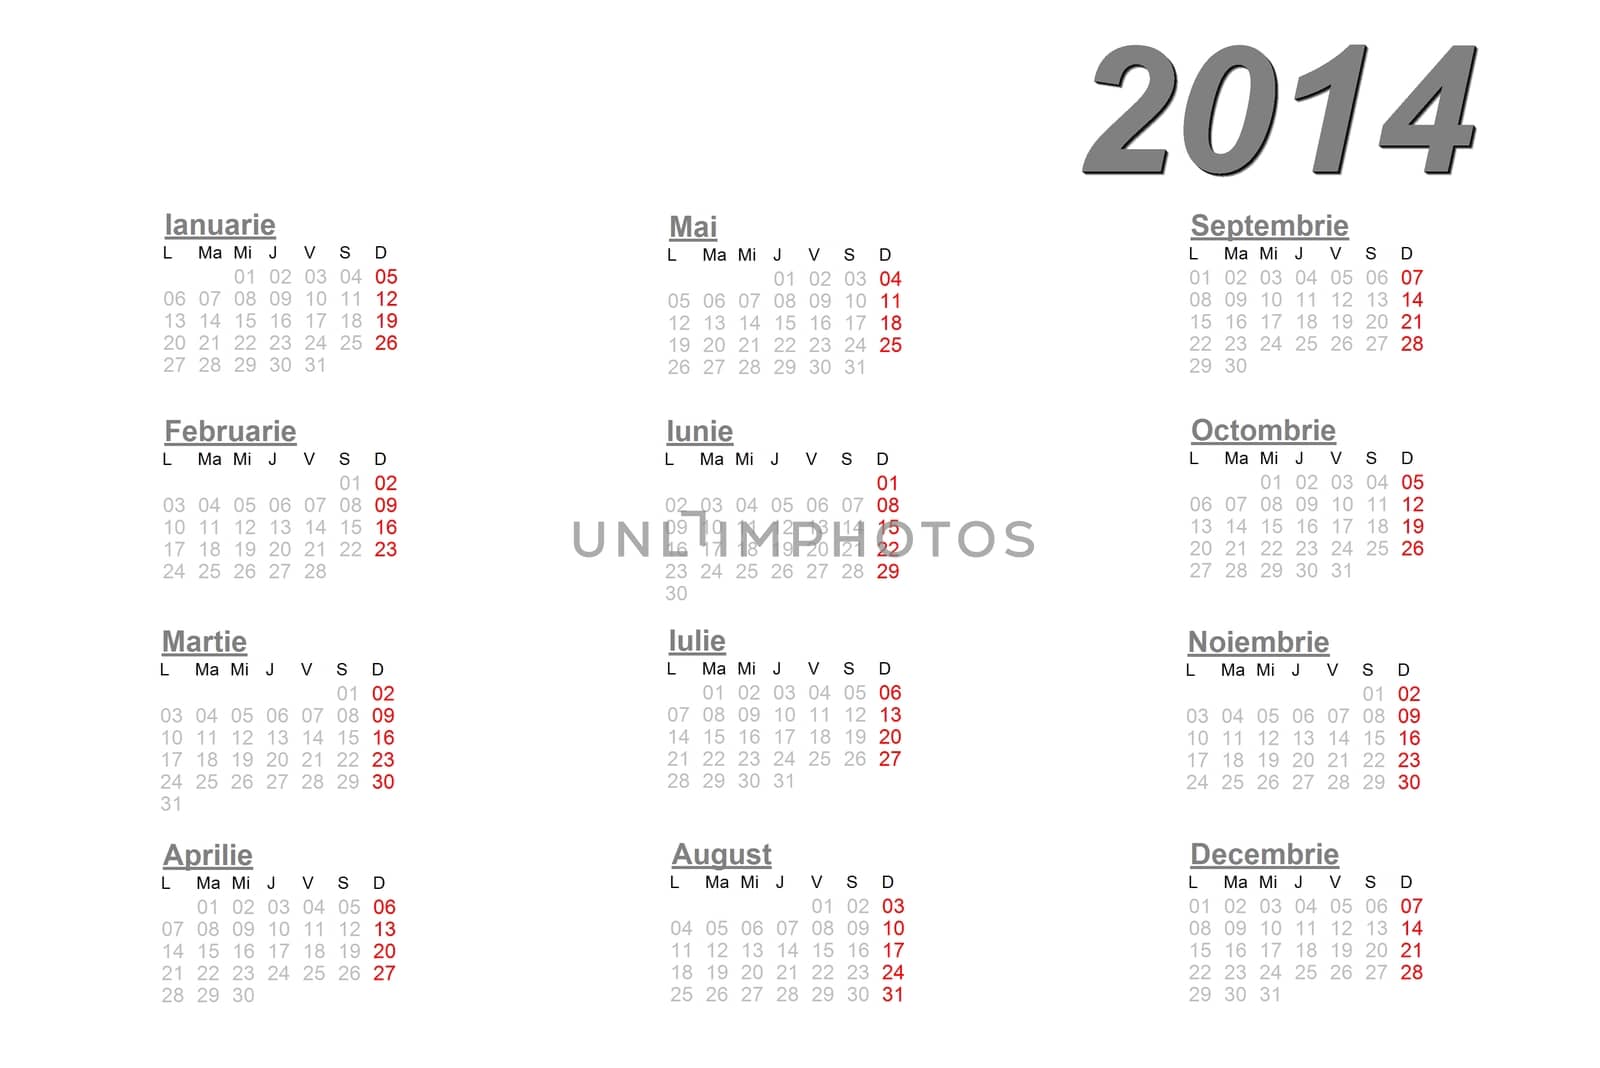 Romanian calendar for 2014 on white background